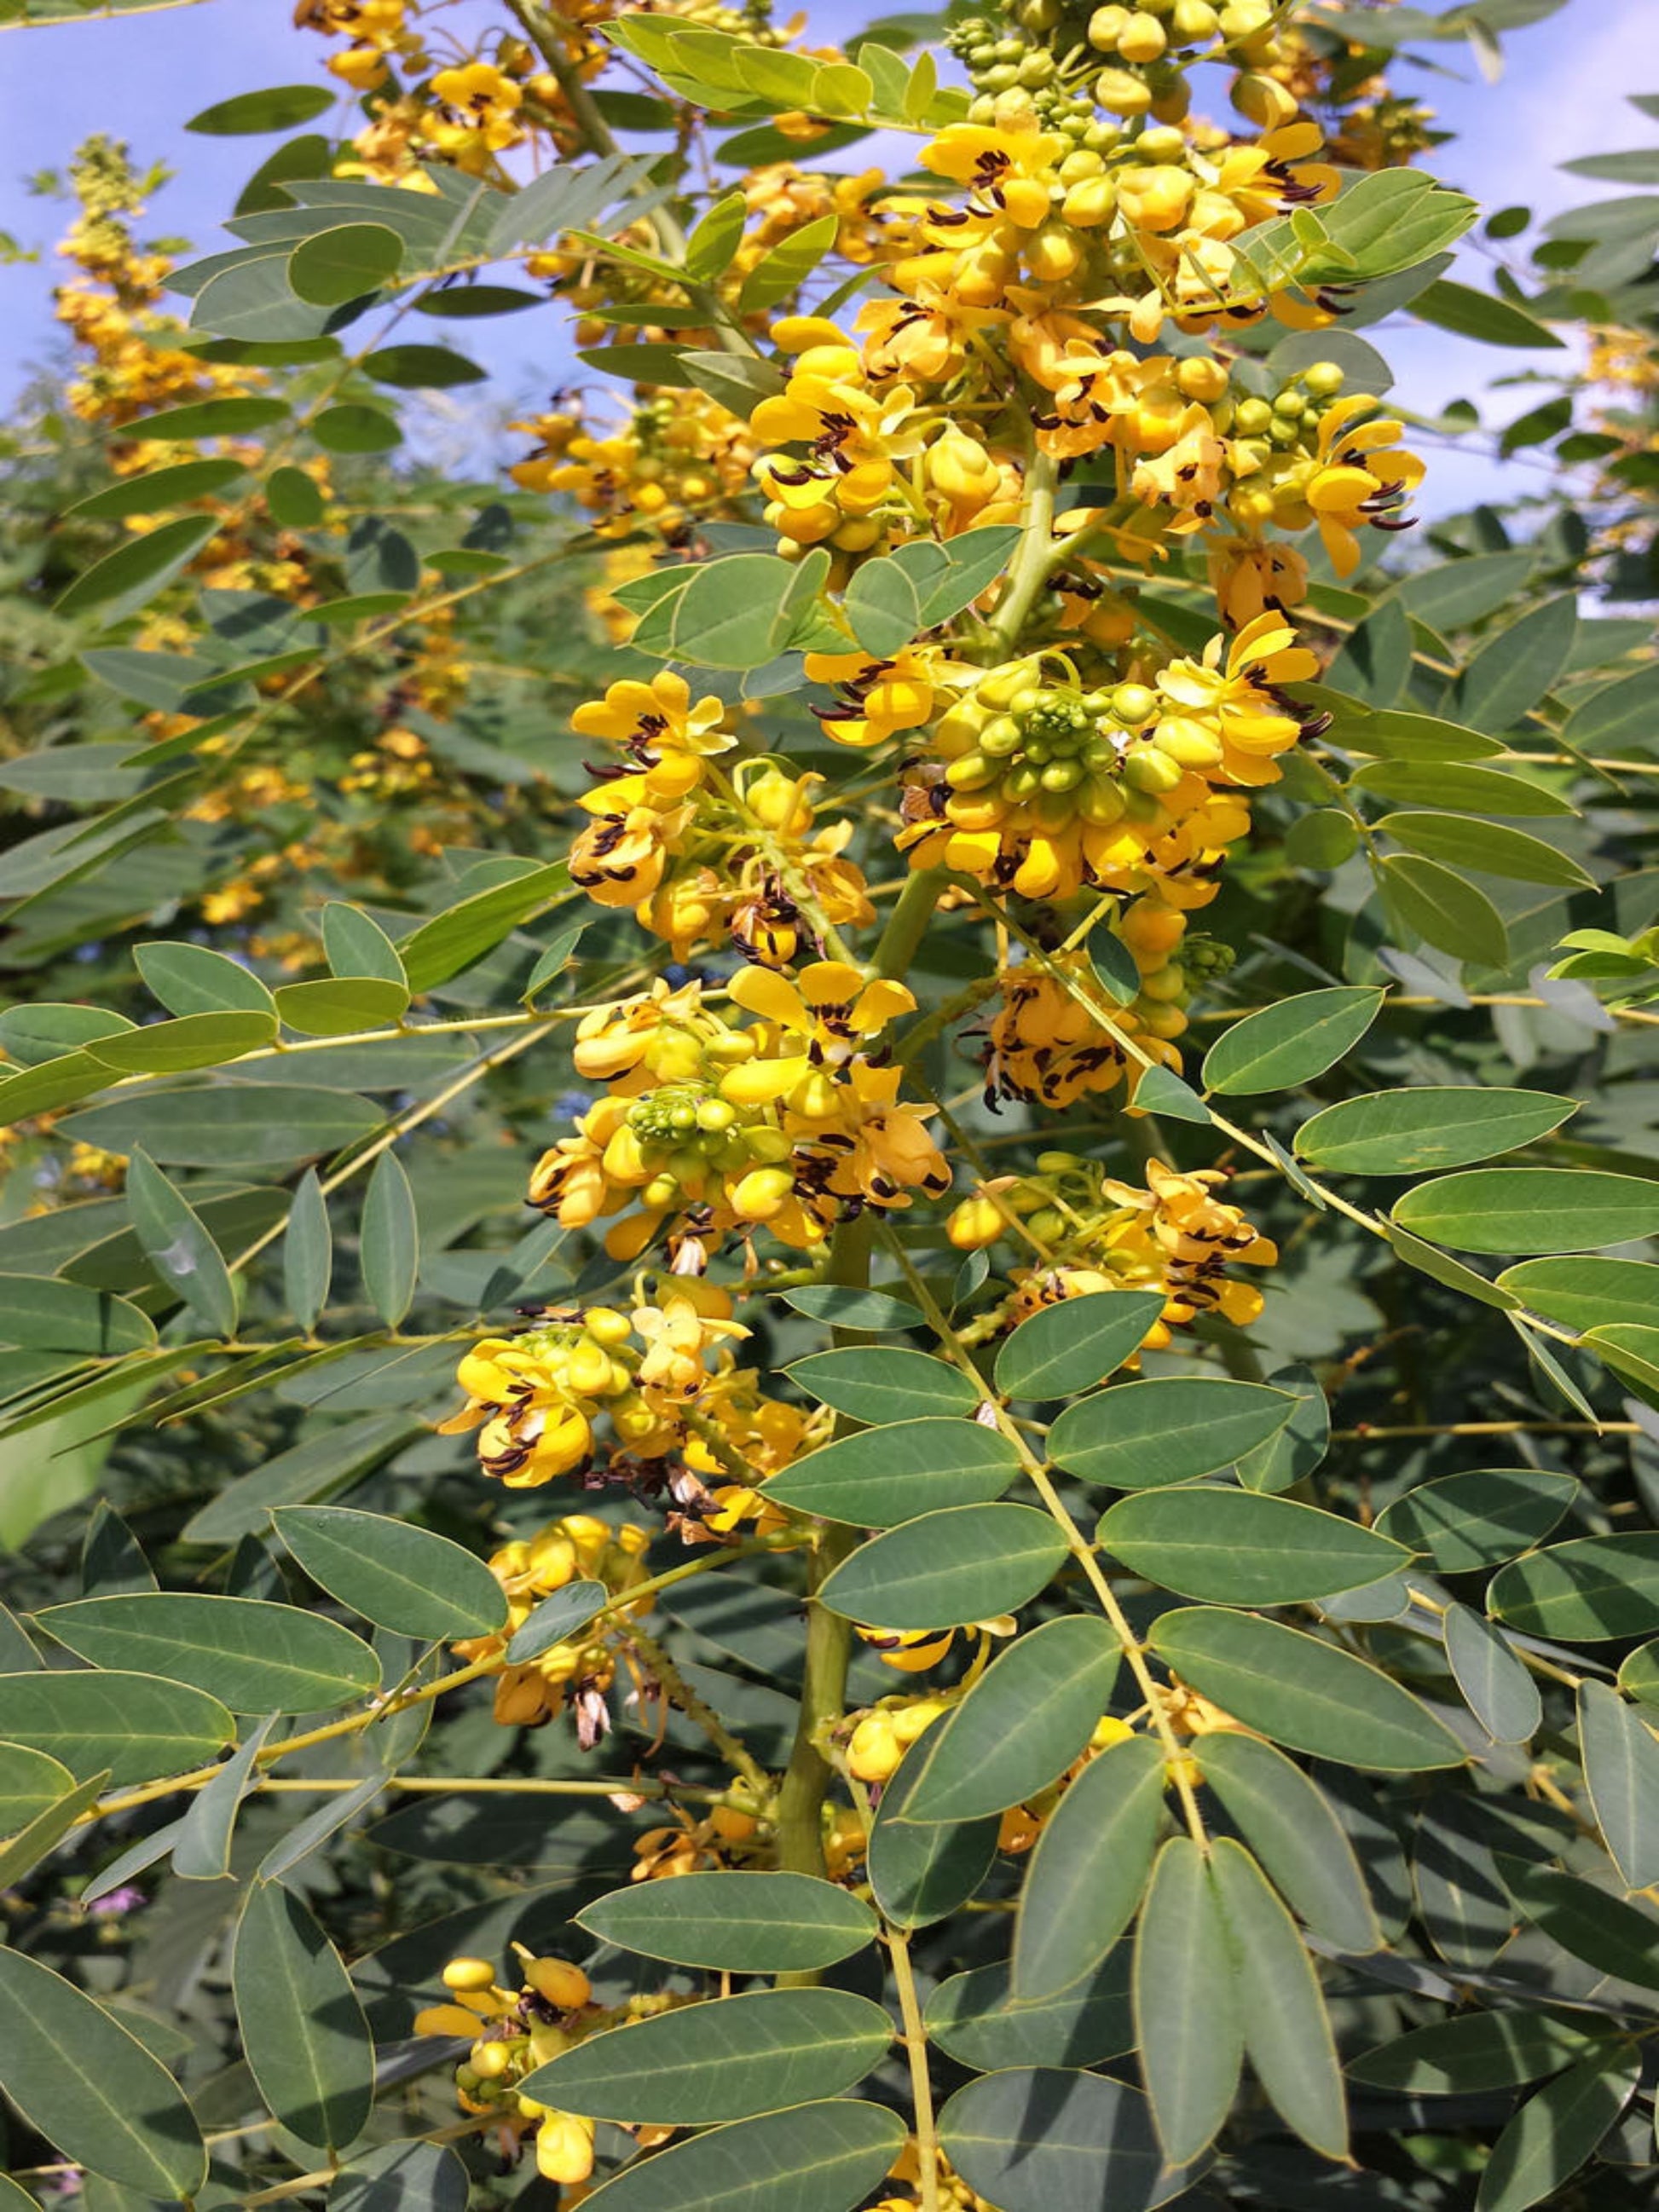 Senna marilandica is a host plant for sulphur butterfly